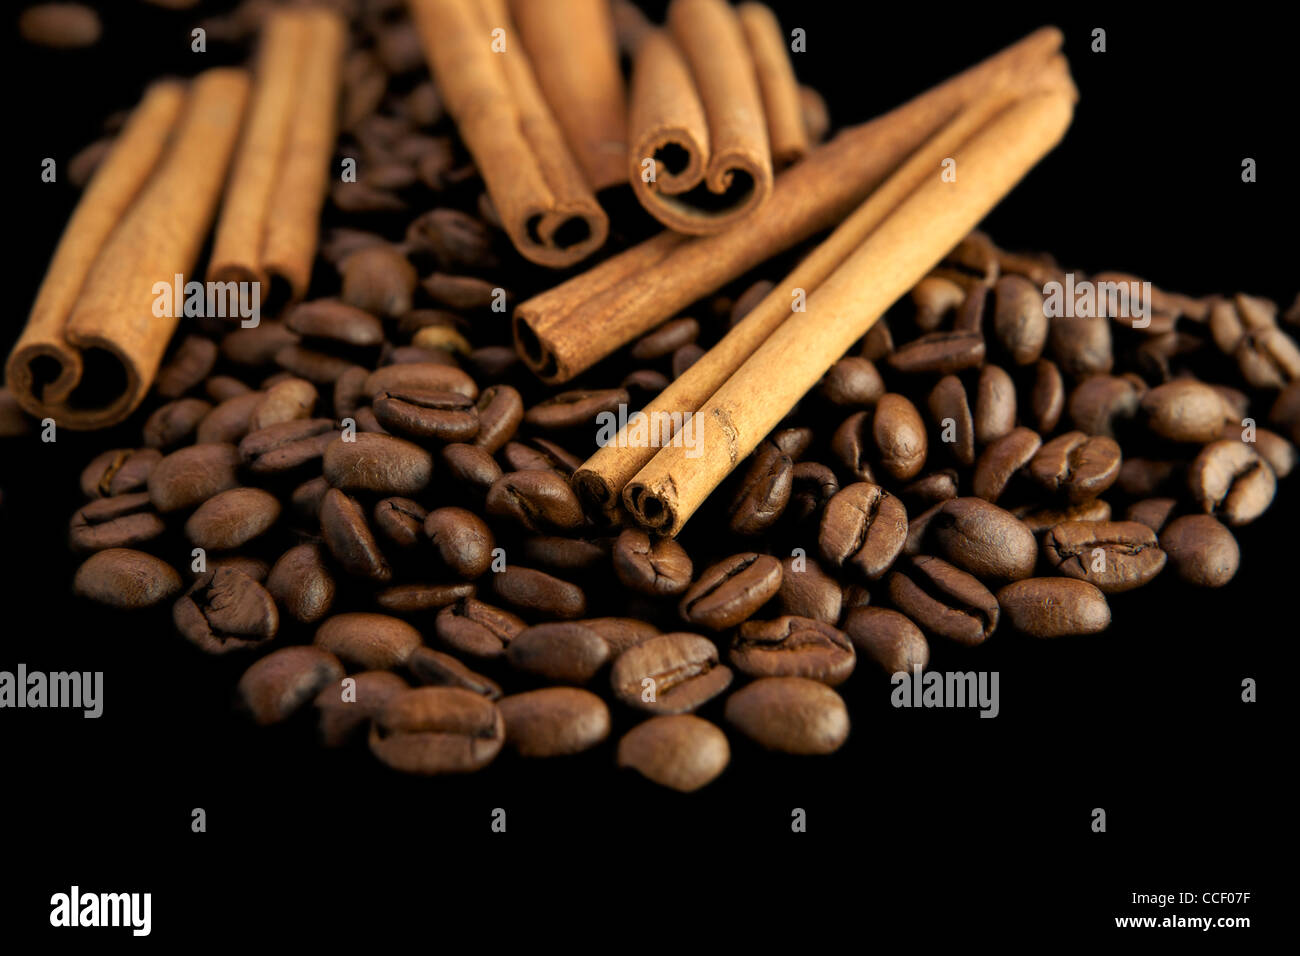 Coffee beans with cinnamon sticks Stock Photo